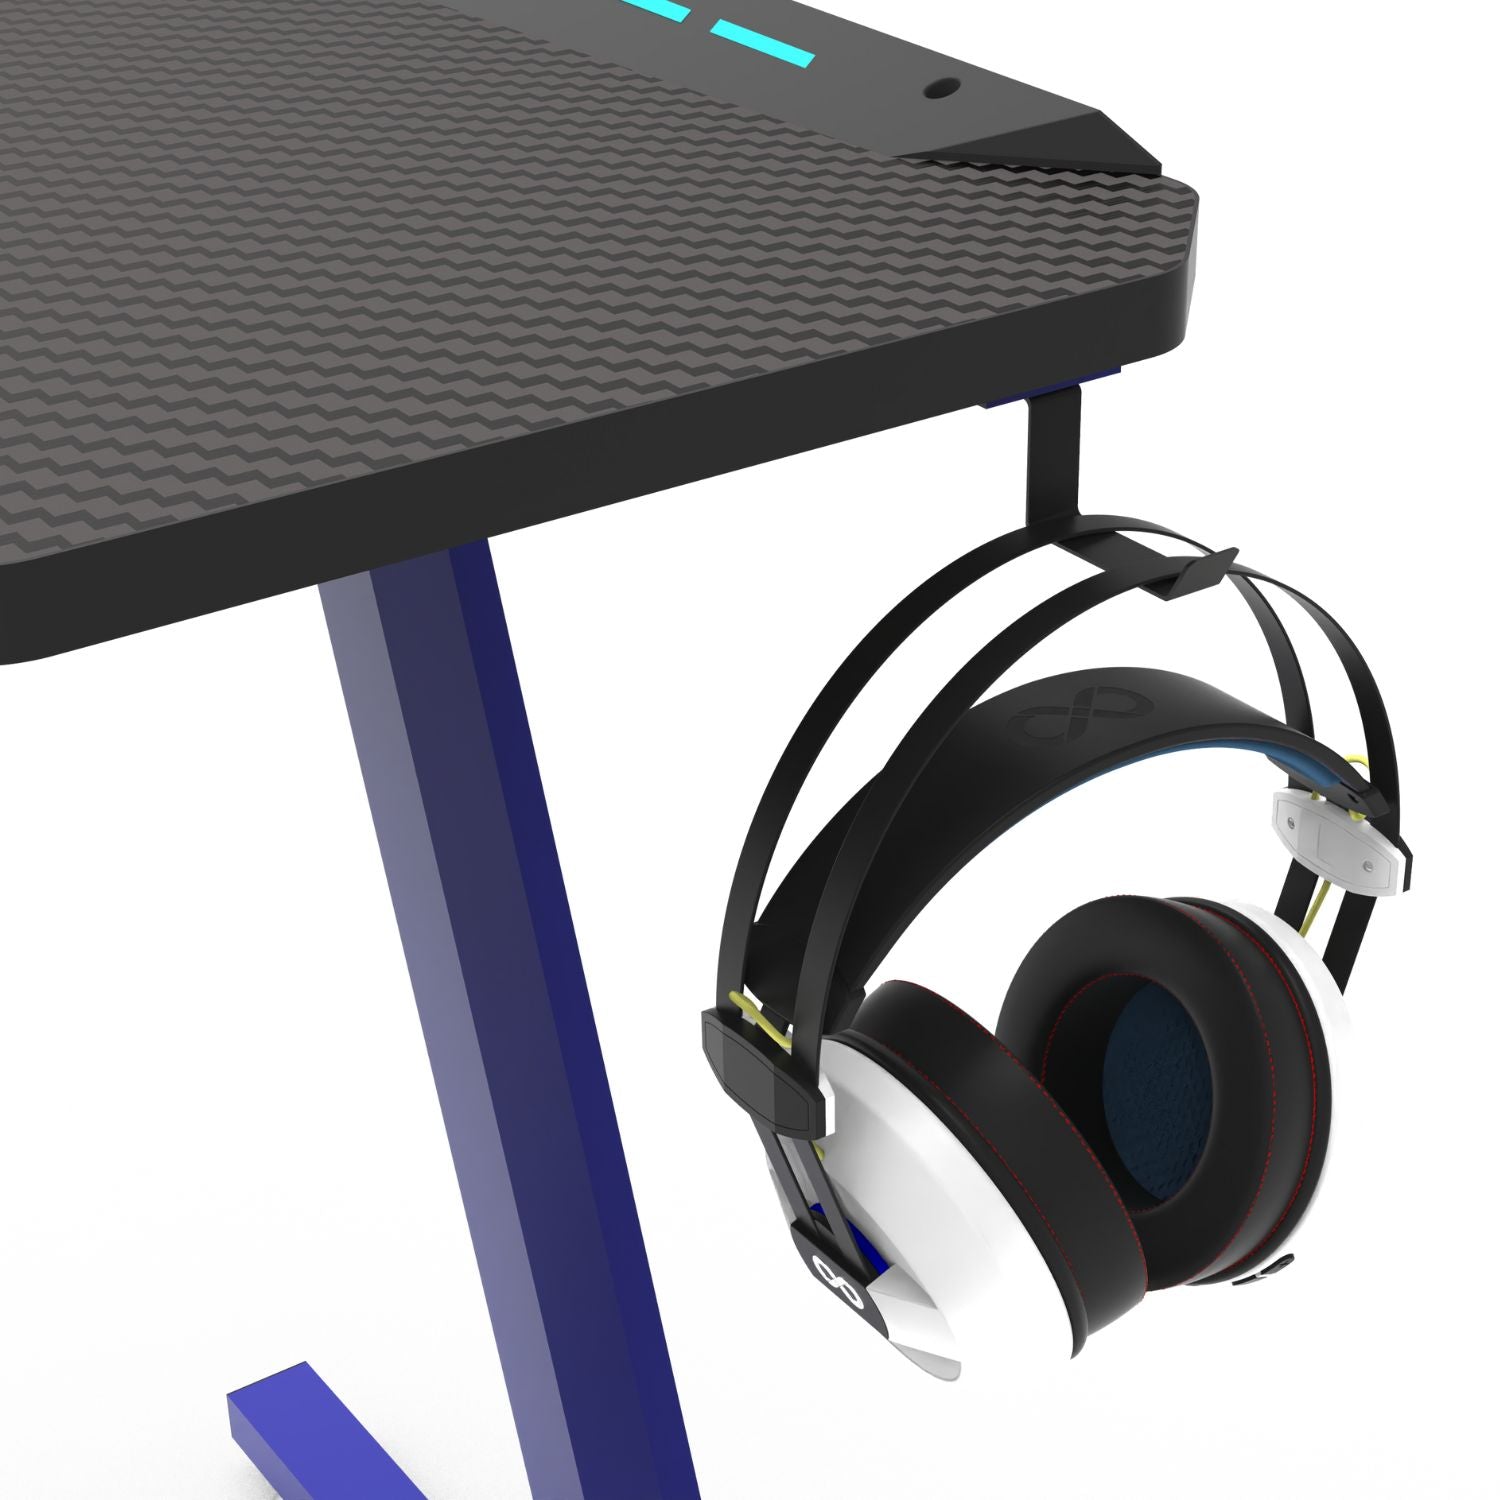 EKKIO RGB Gaming Desk Z Shape Blue 140cm